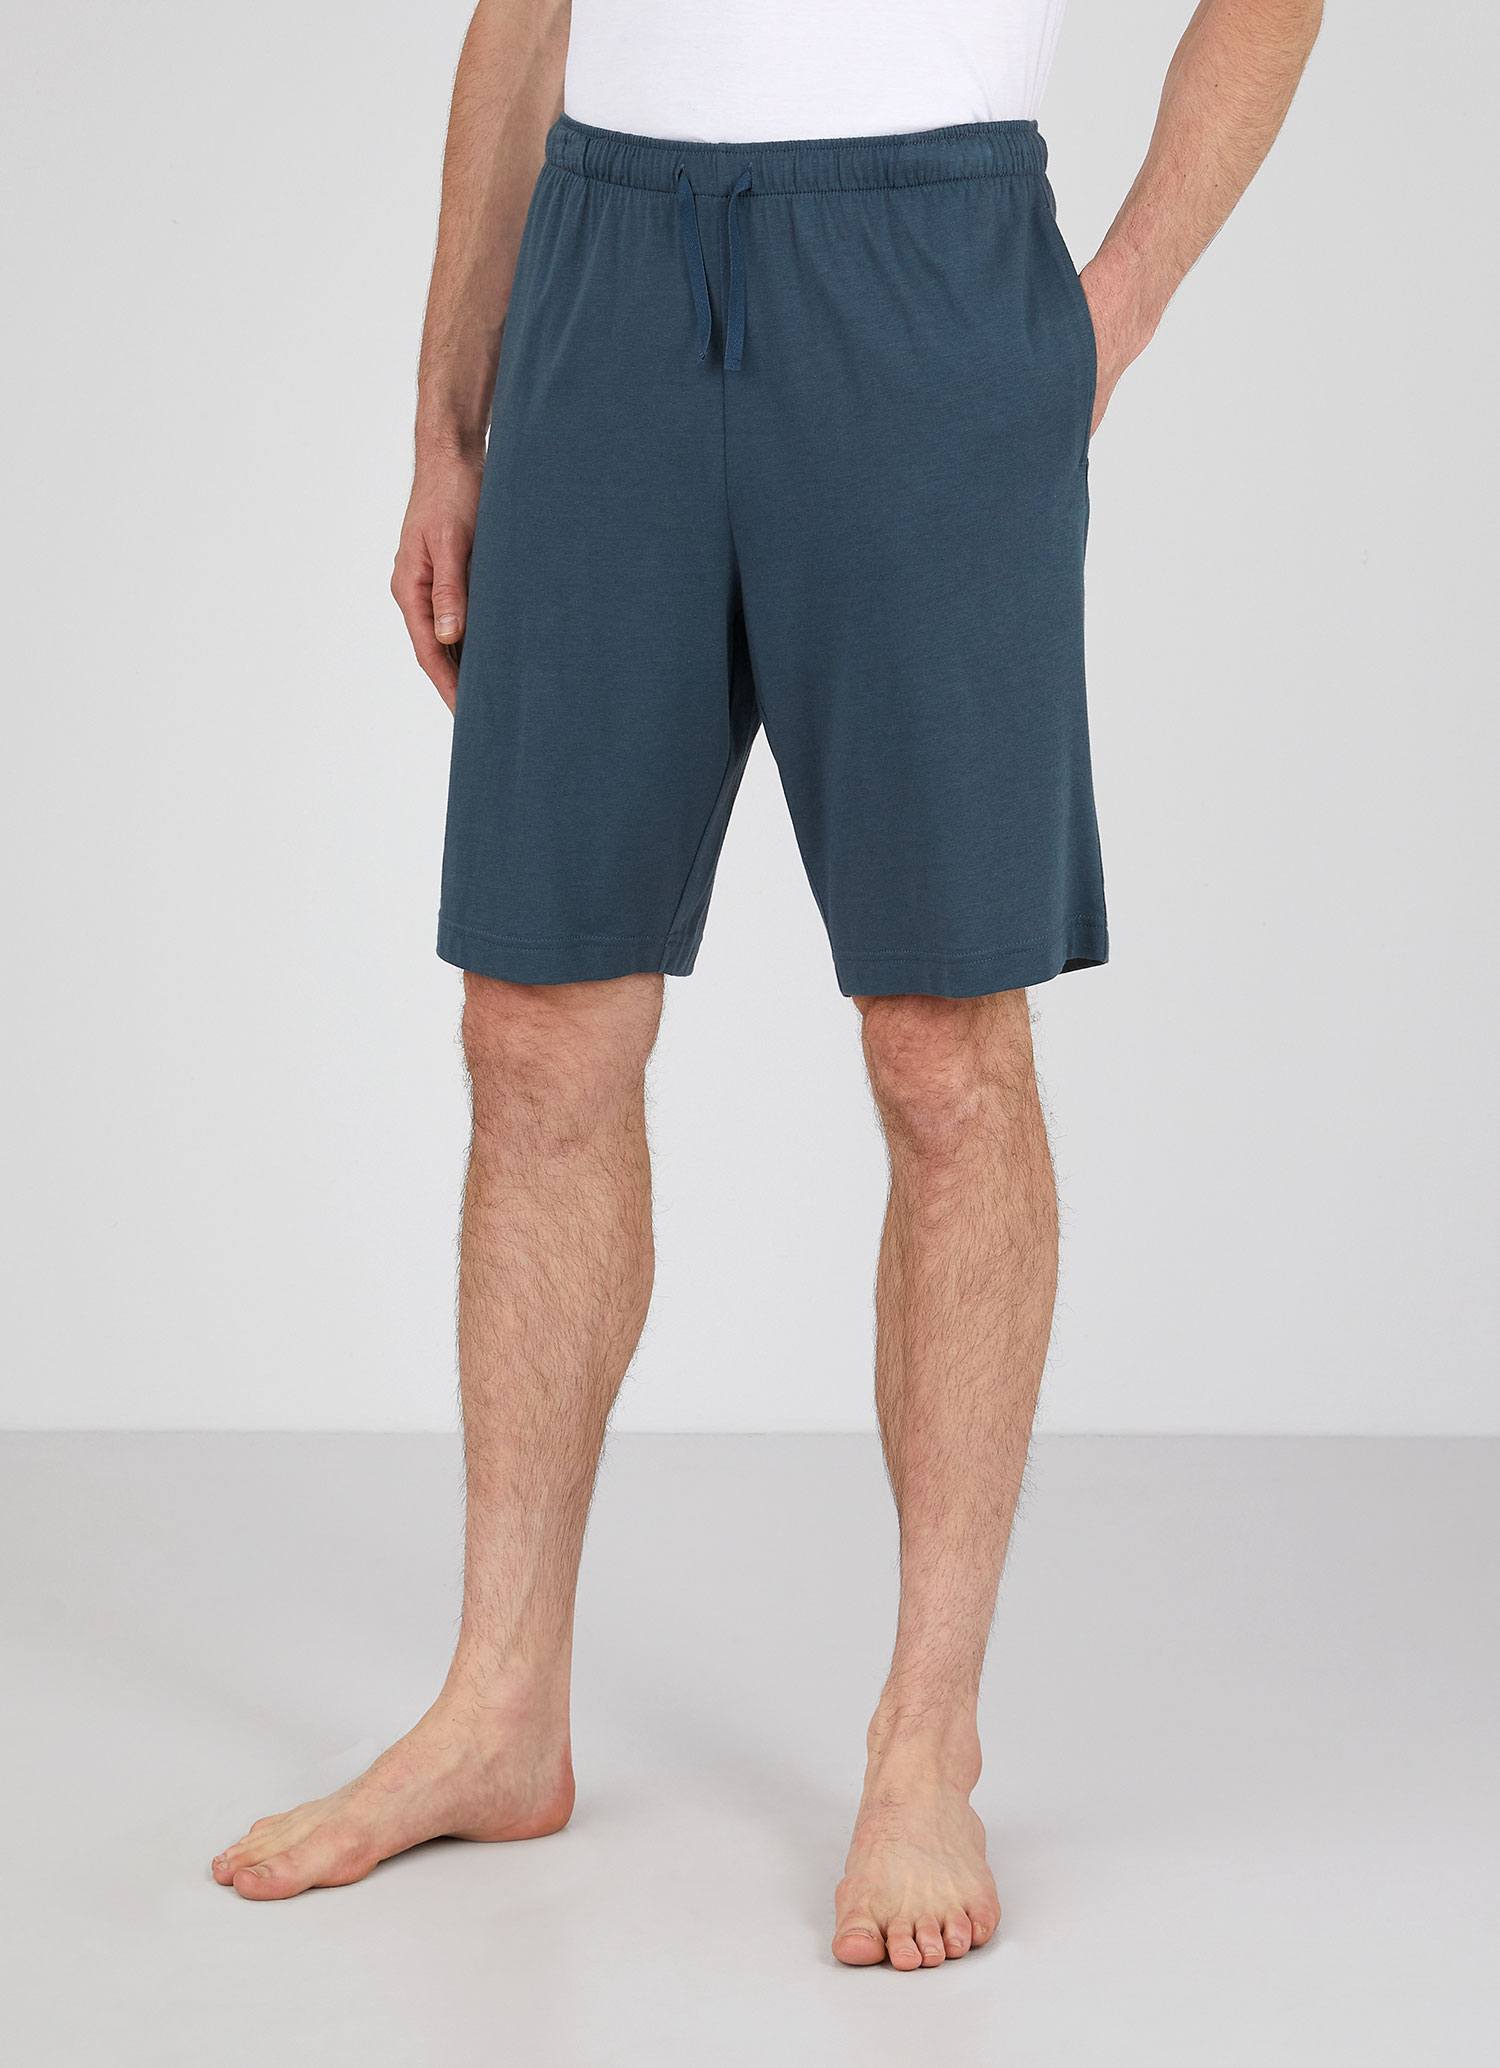 Men's Cotton Modal Lounge Shorts in Dark Petrol